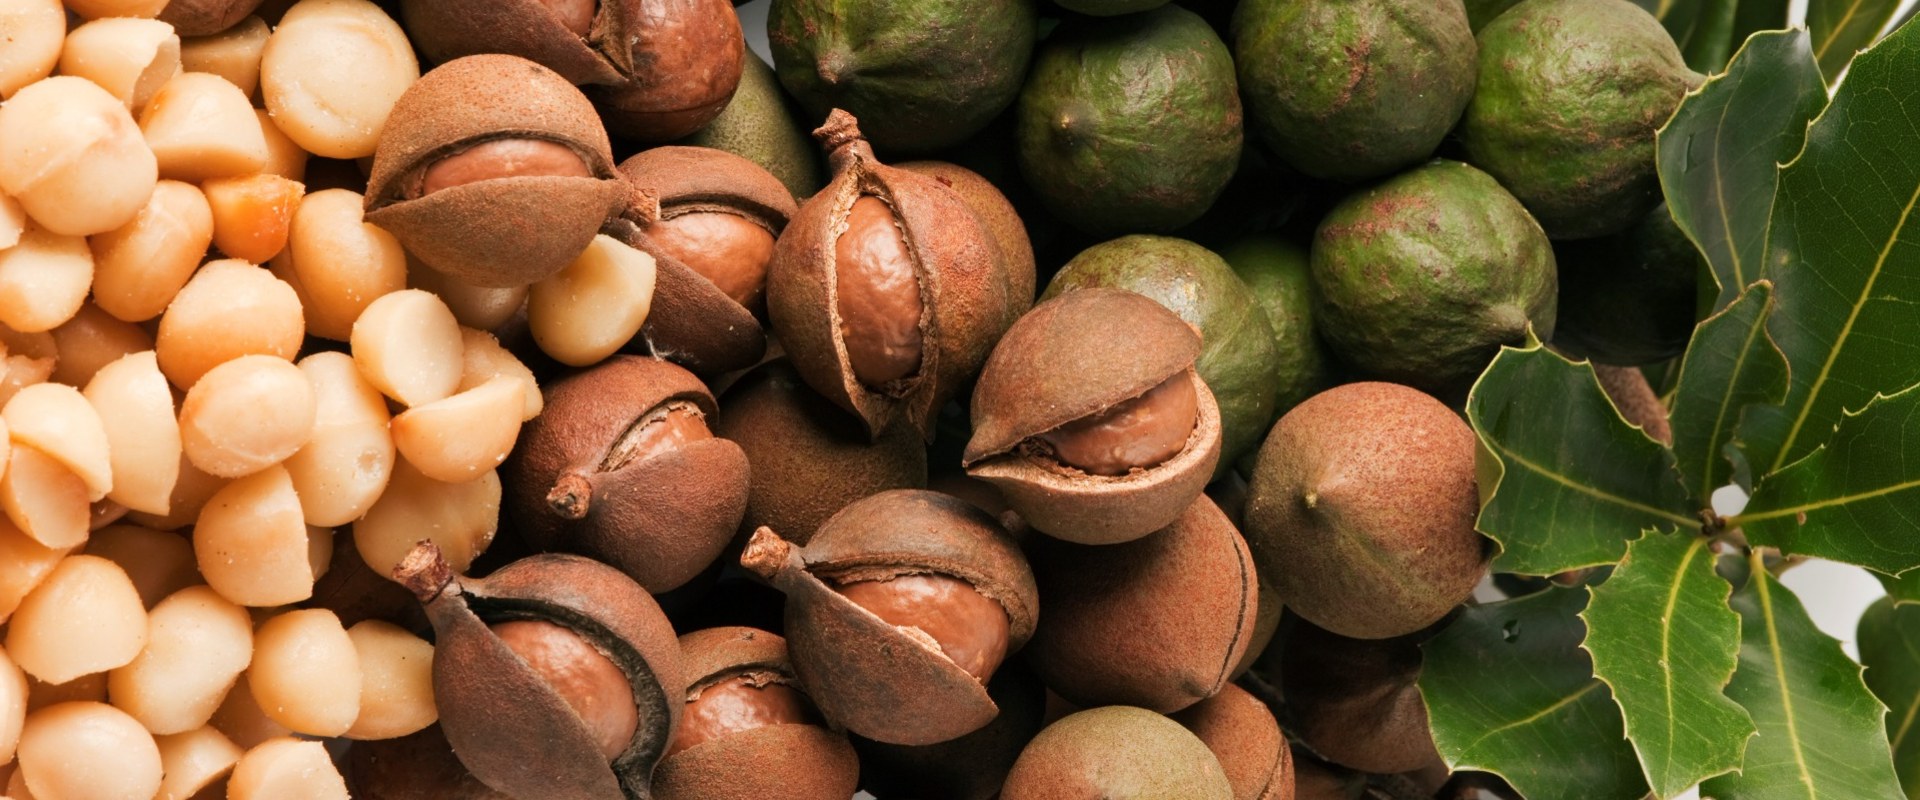 How often do you harvest macadamia nuts?